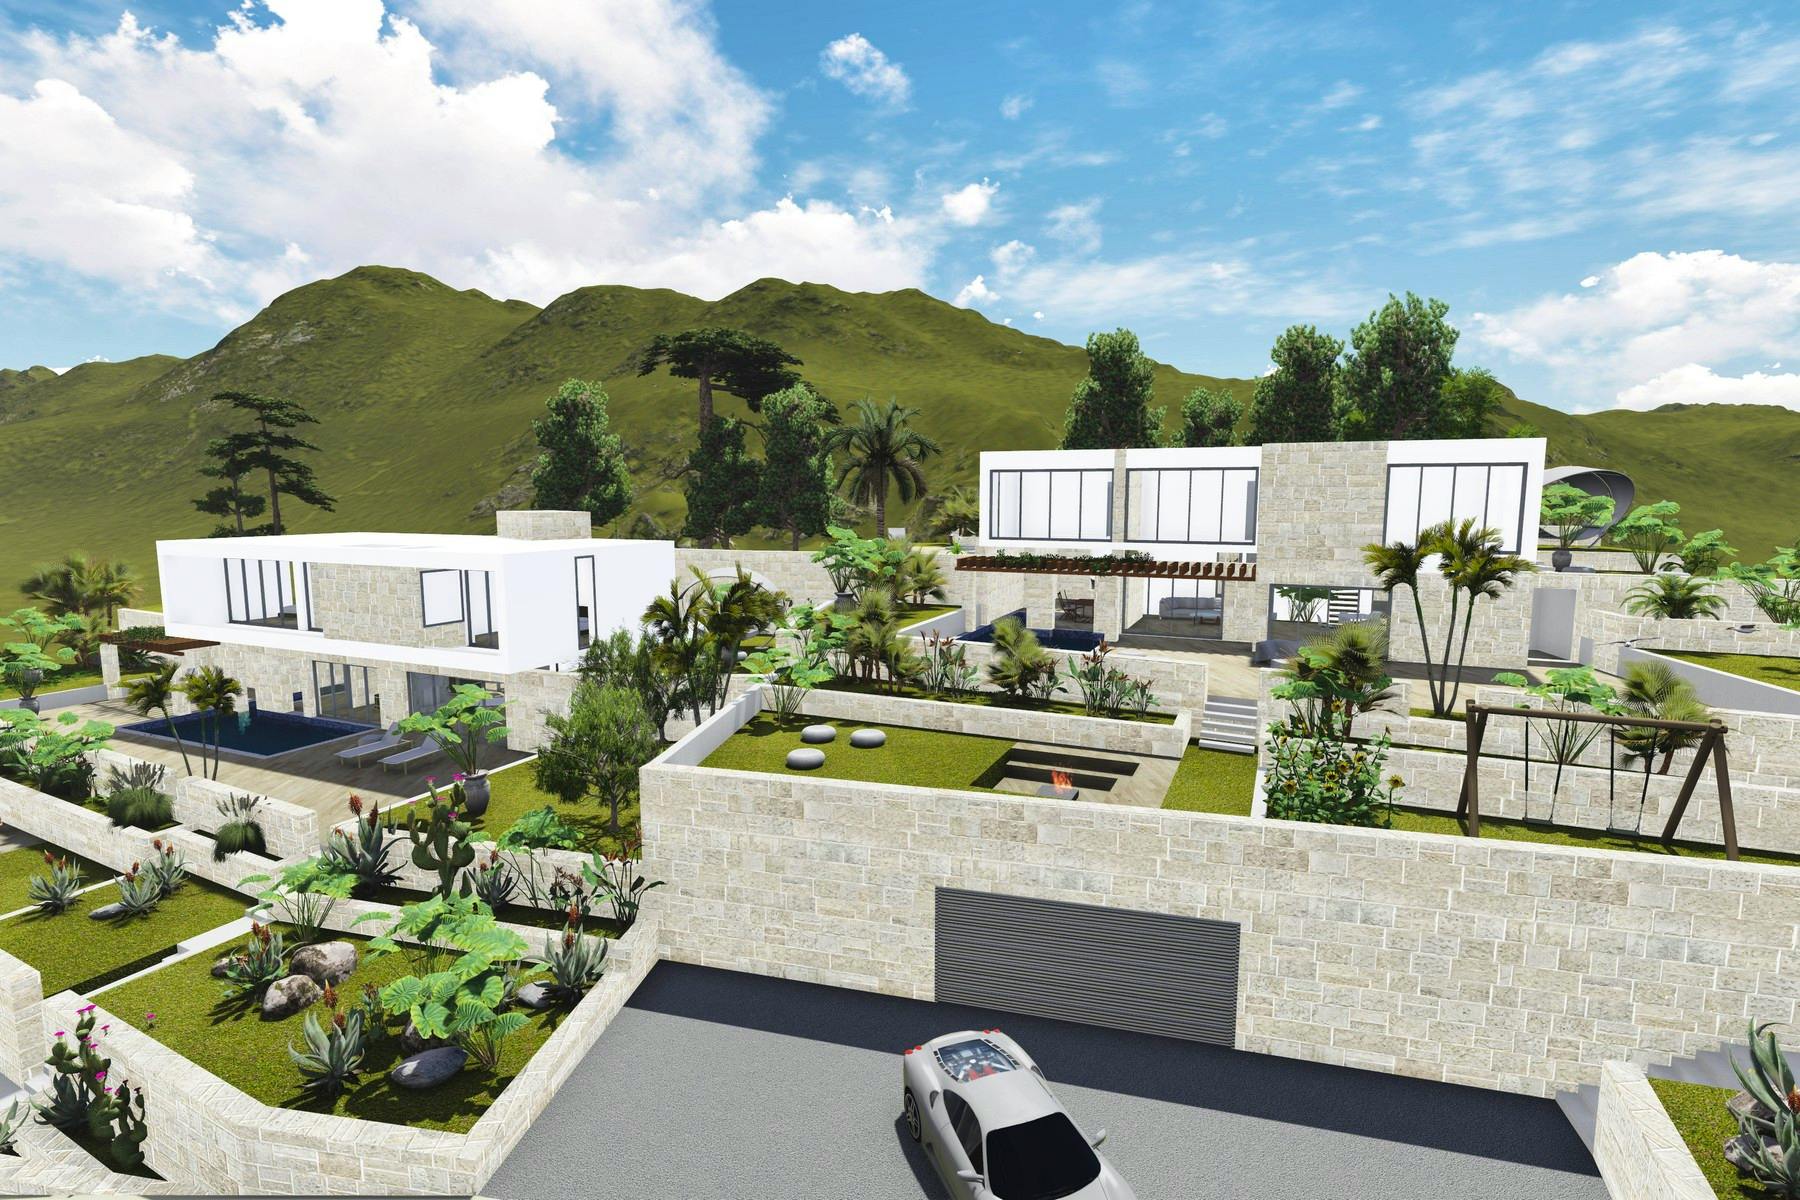 Project of 2 villas